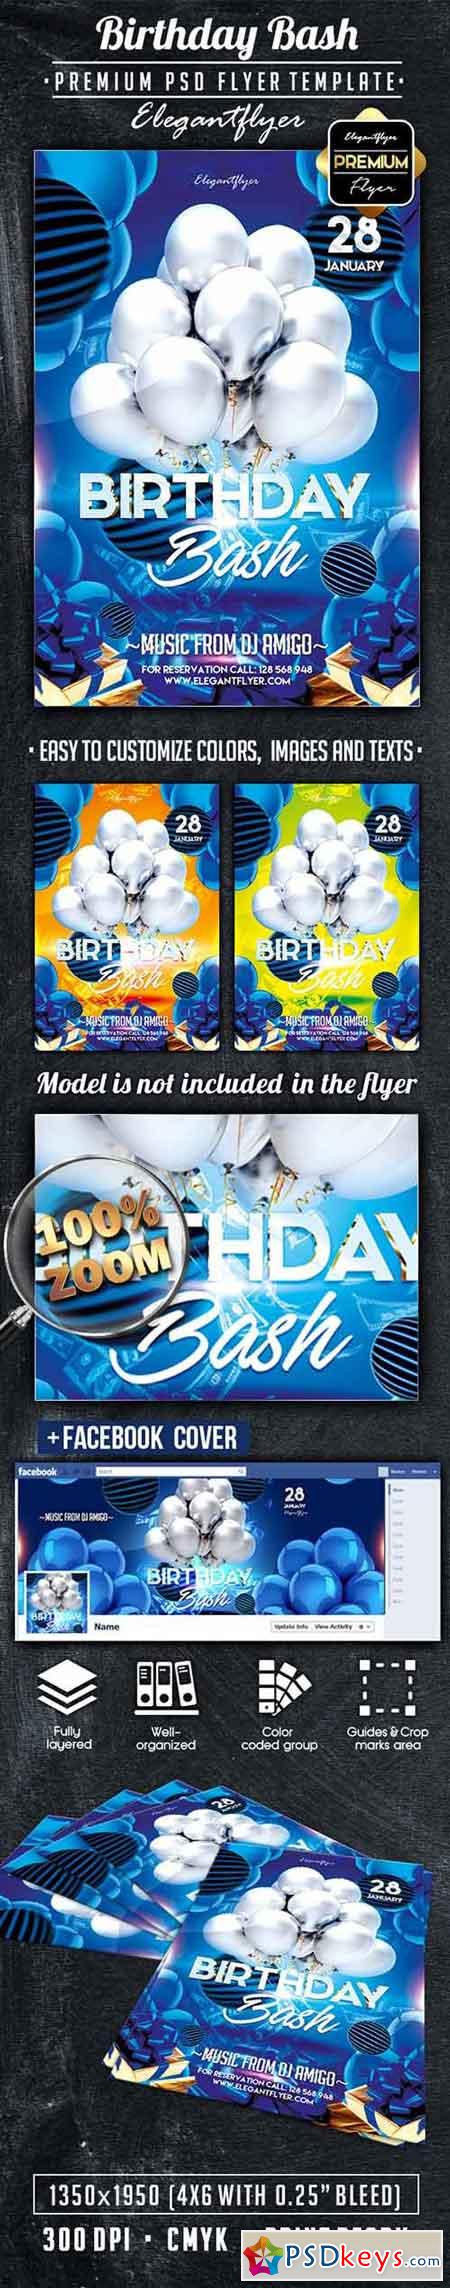 Birthday Bash Flyer PSD Template + Facebook Cover